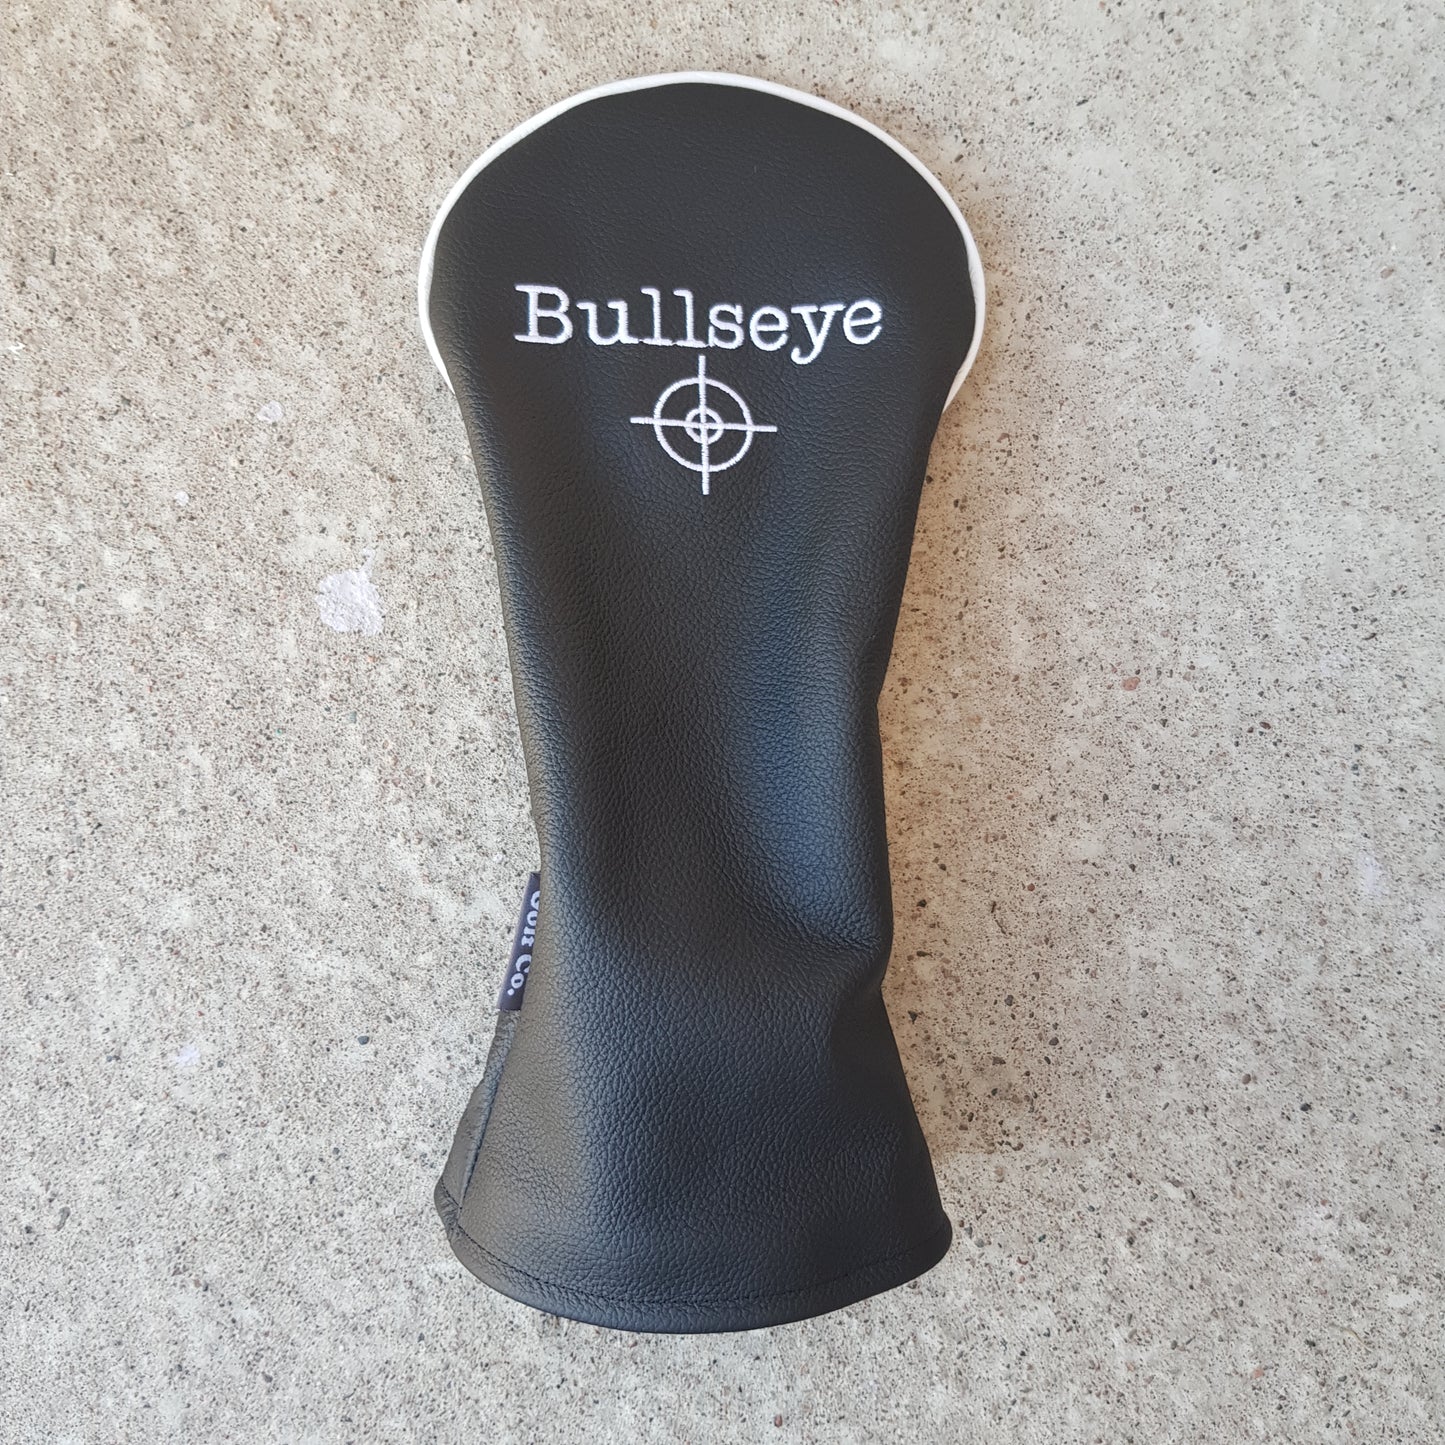 Bullseye deluxe Driver headcover